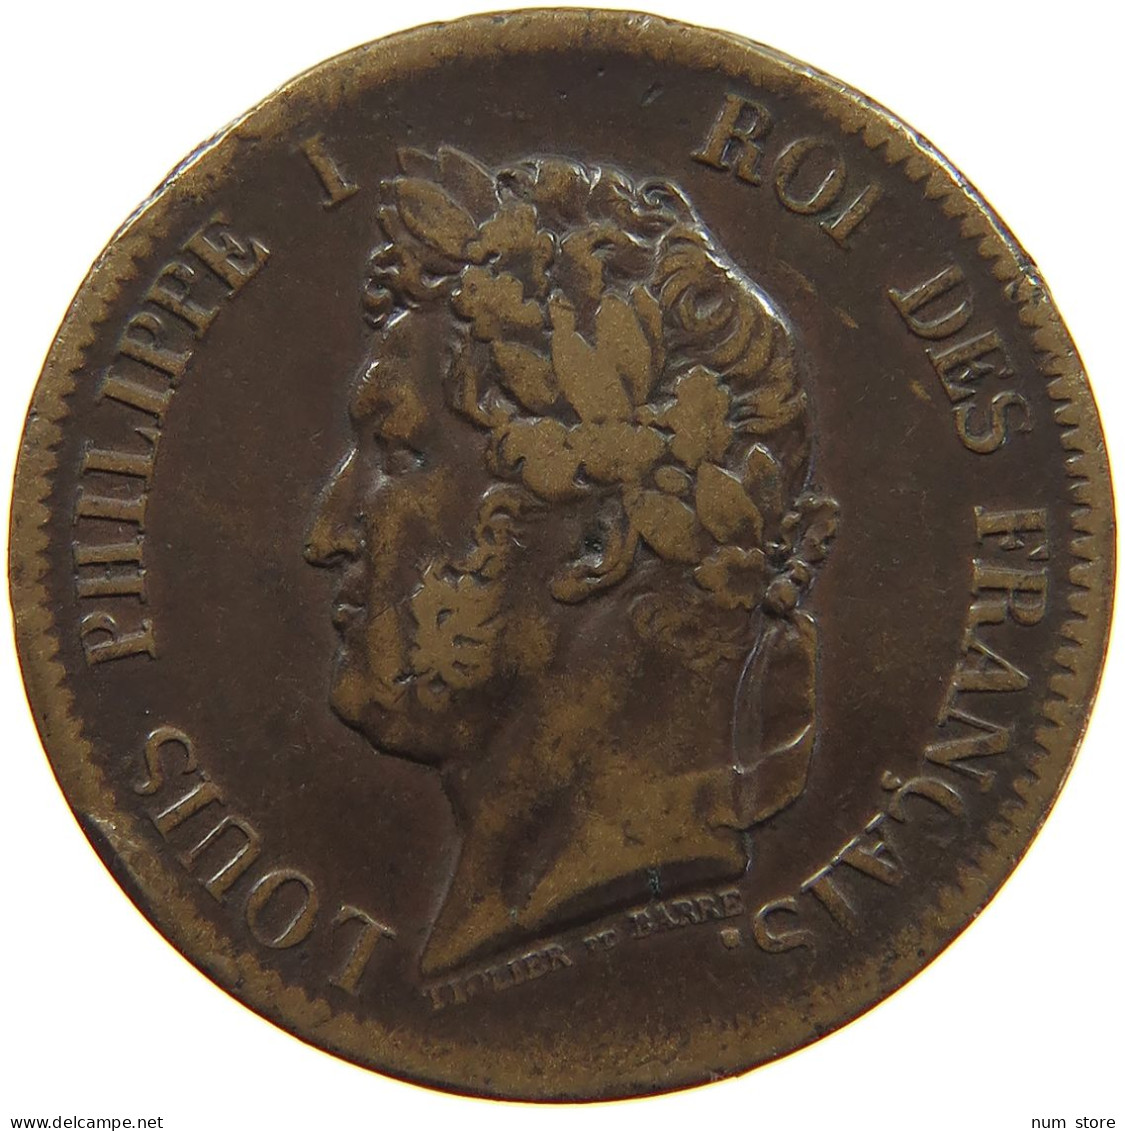 FRENCH COLONIES 5 CENTIMES 1843 A LOUIS PHILIPPE I. (1830-1848) #c061 0071 - Französische Kolonien (1817-1844)